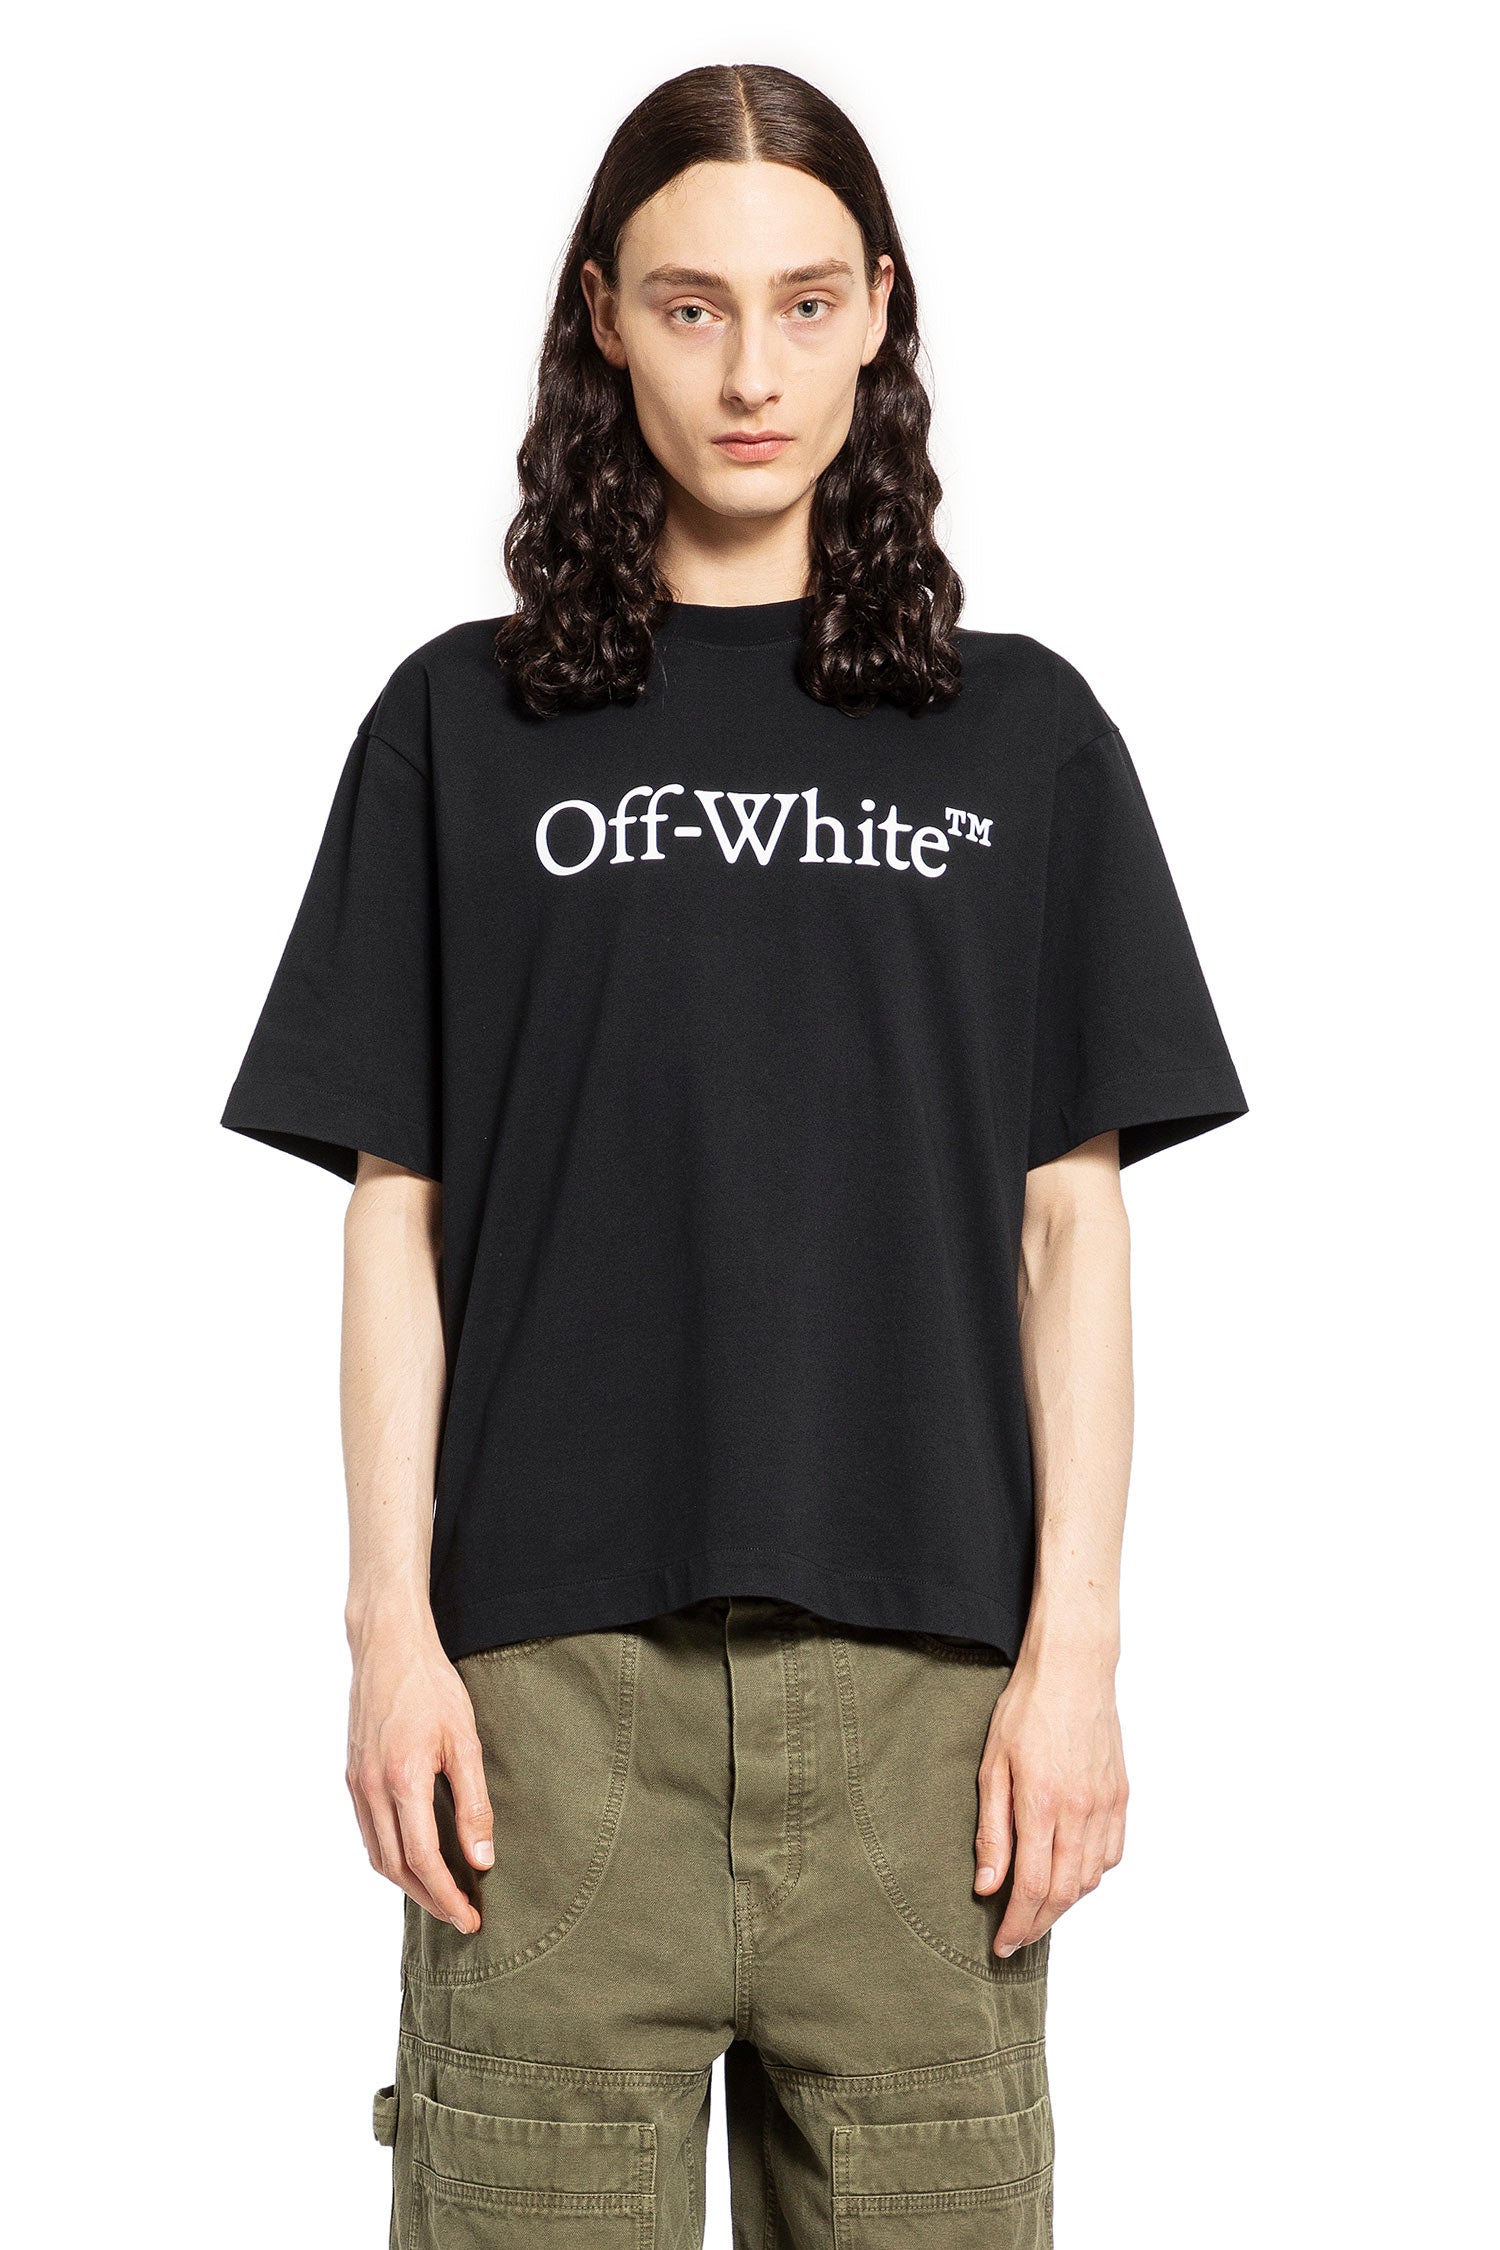 OFF-WHITE MAN BLACK T-SHIRTS & TANK TOPS